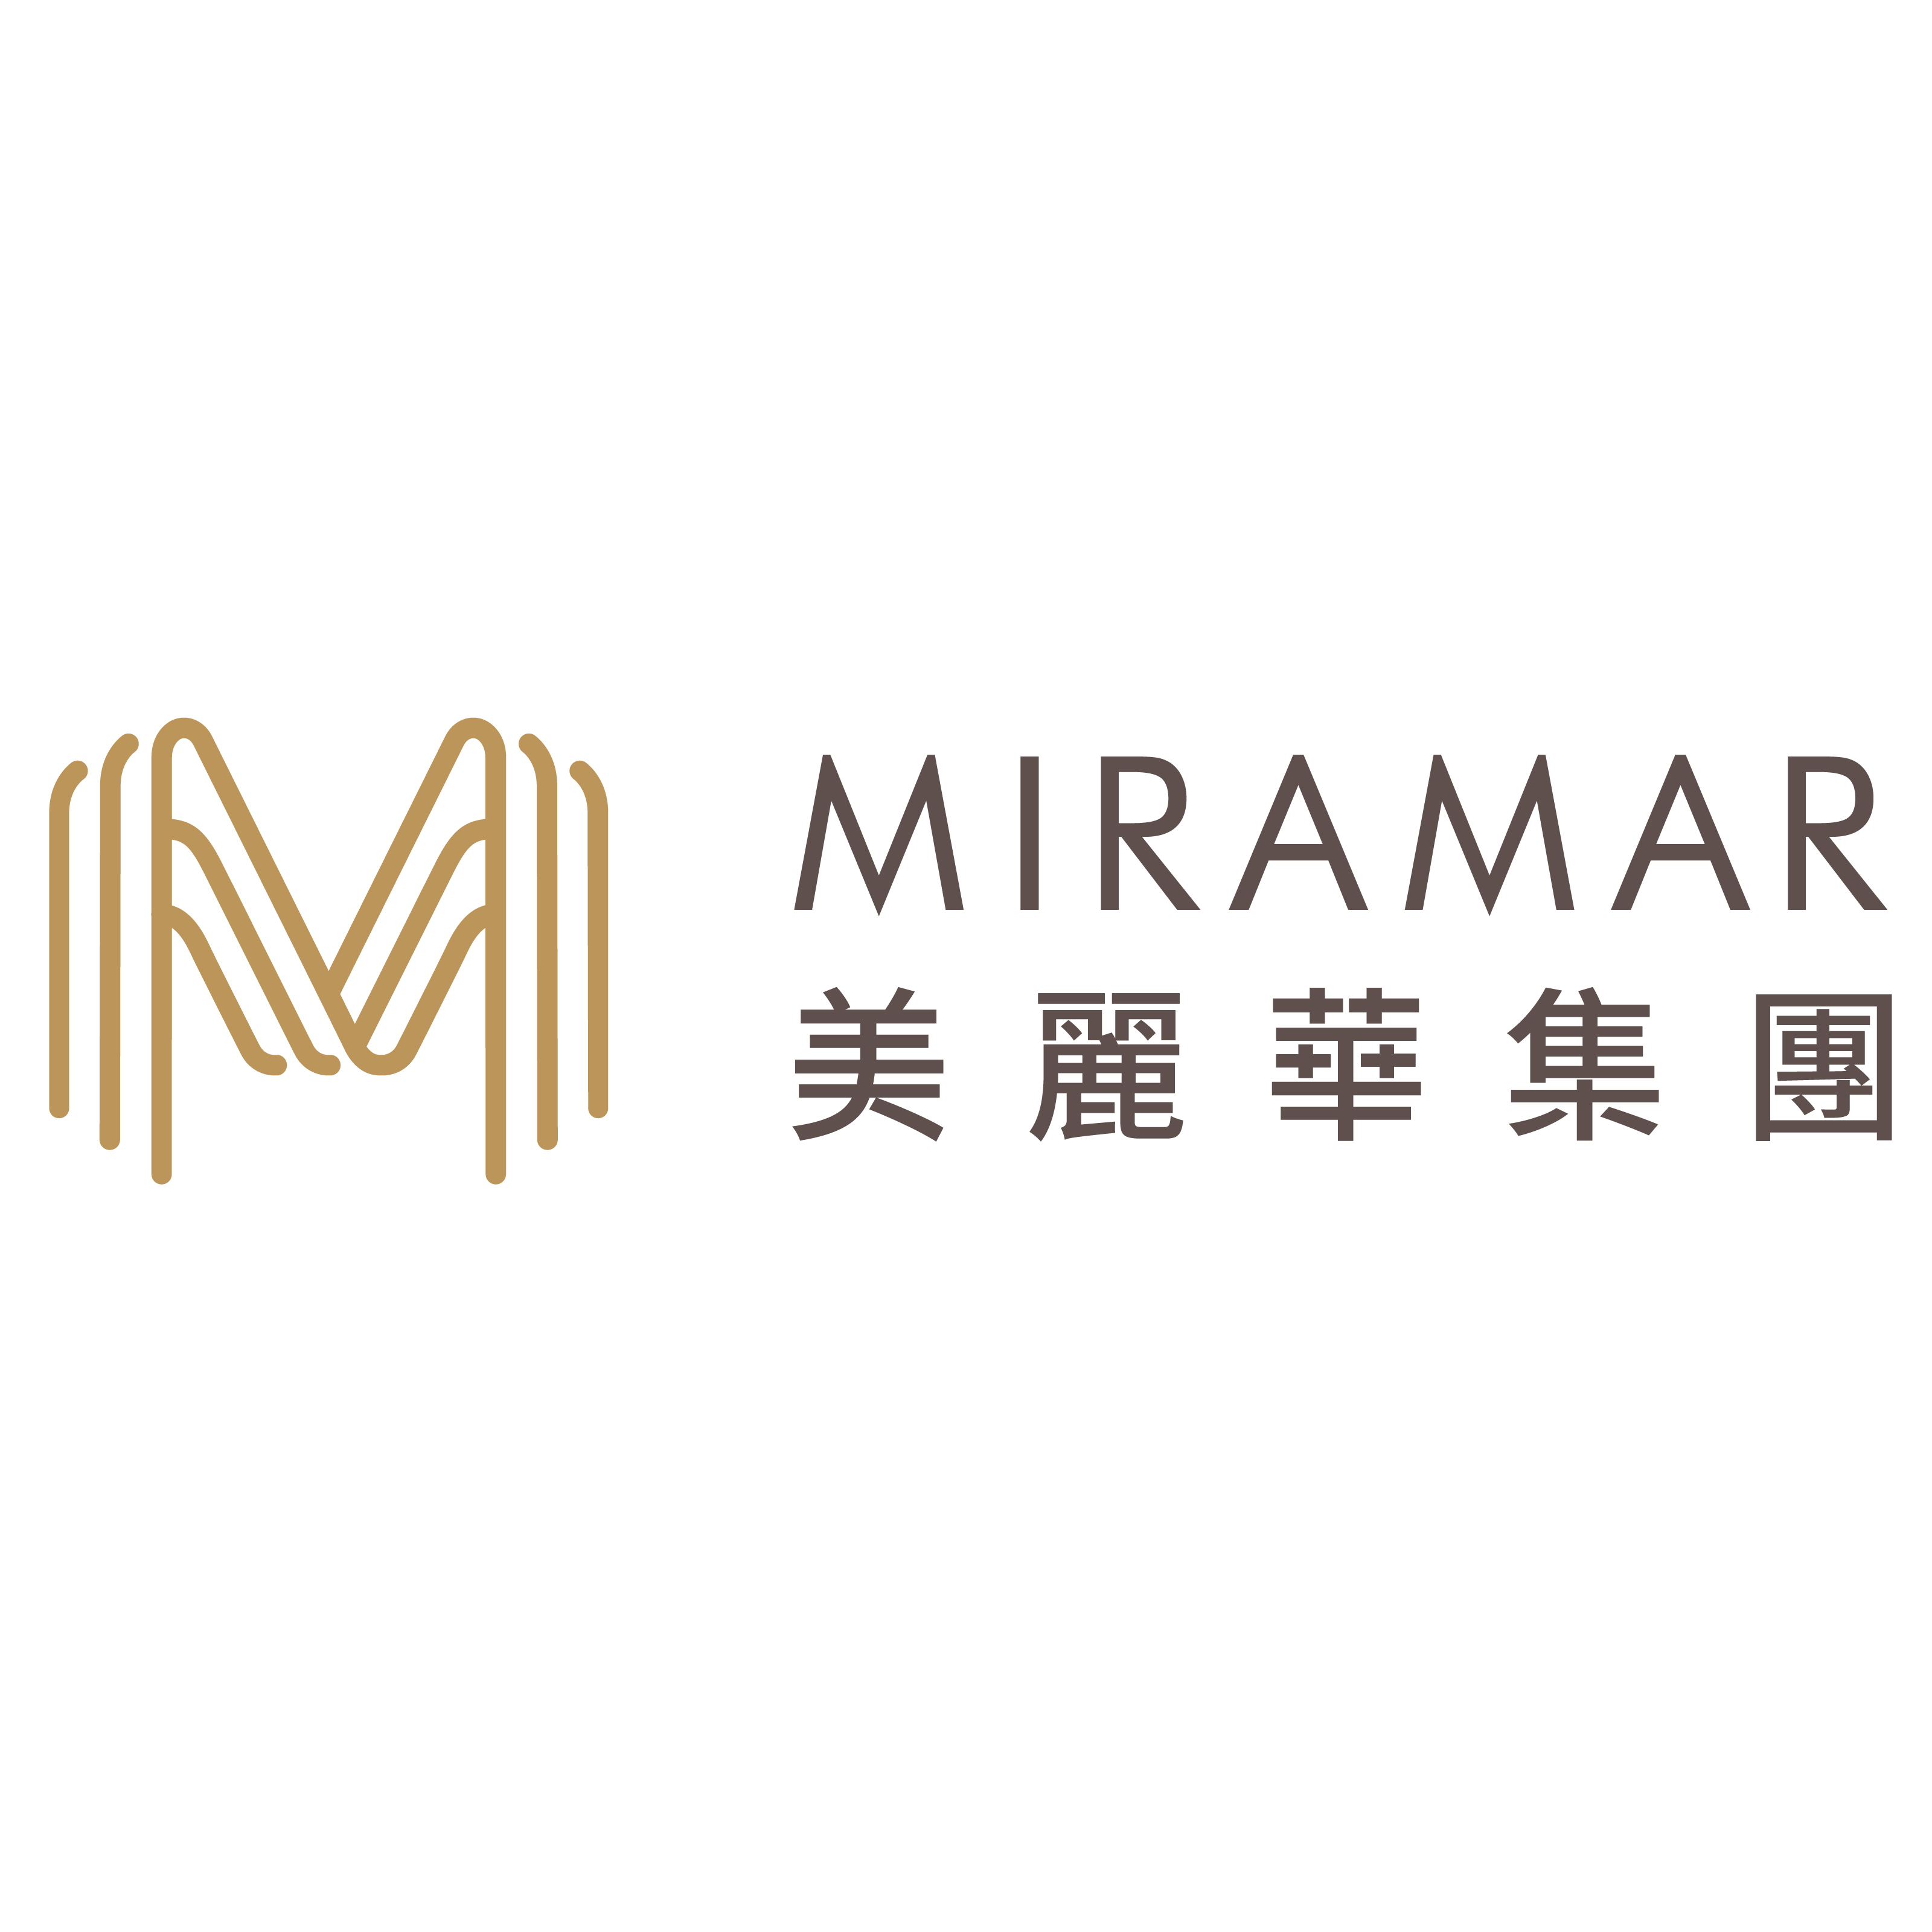 Miramar Group